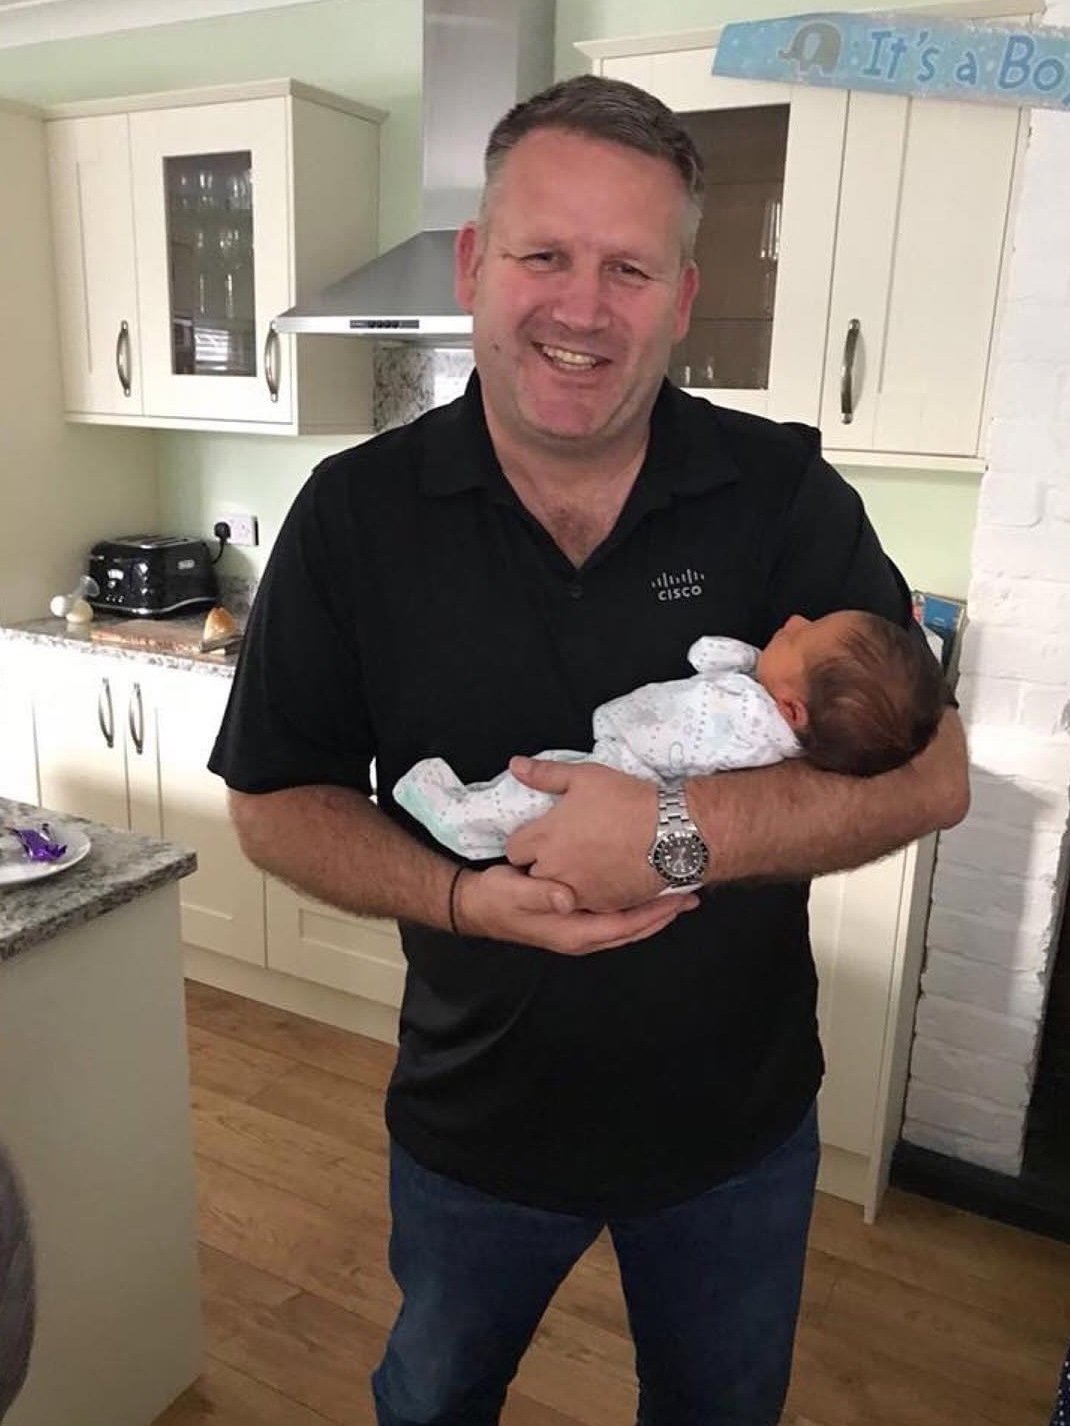 Gavin holding a baby in a Cisco tshirt.